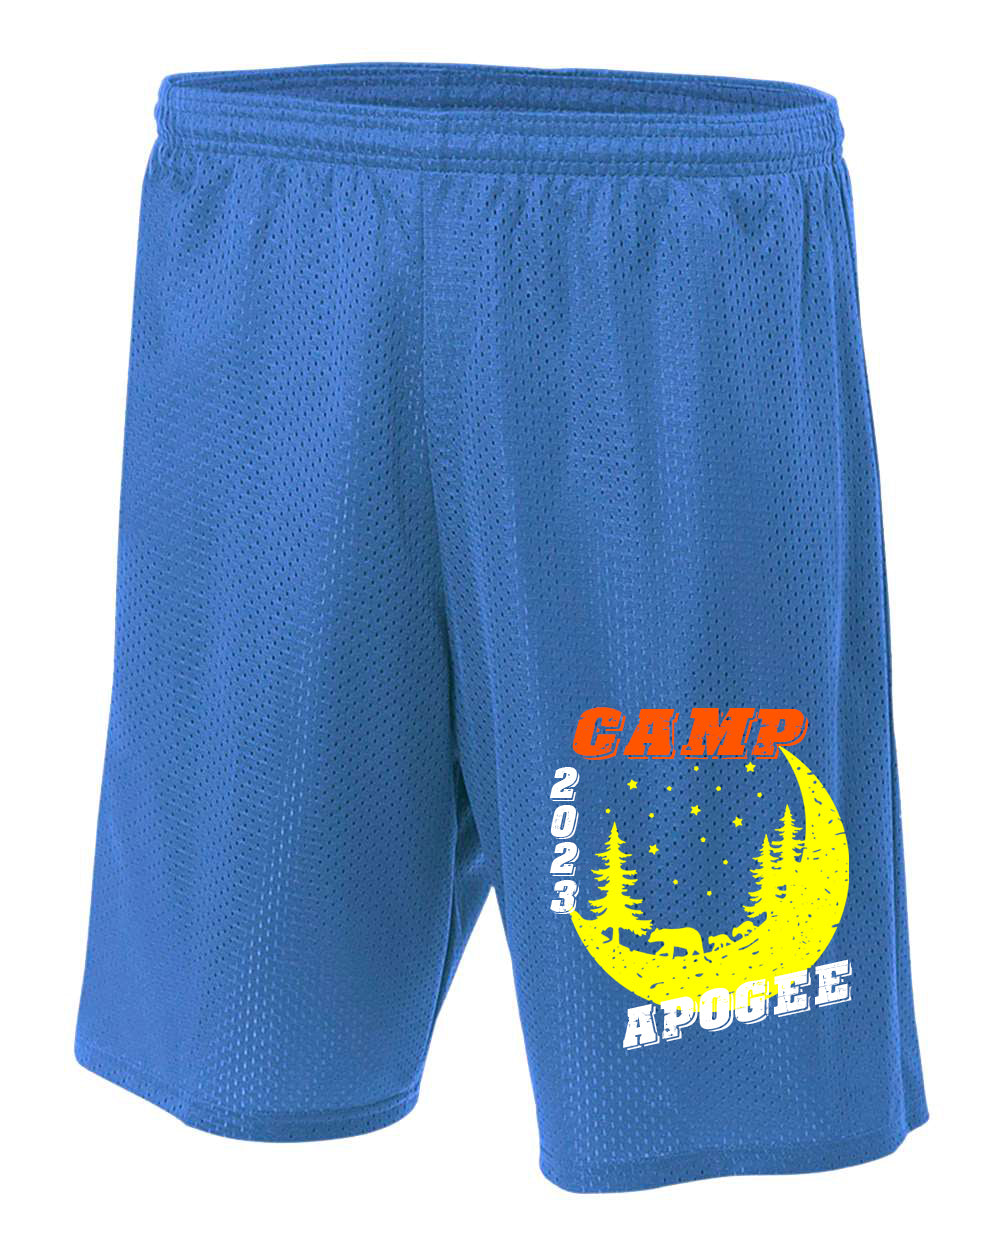 Hilltop Camp Design 1 Mesh Shorts